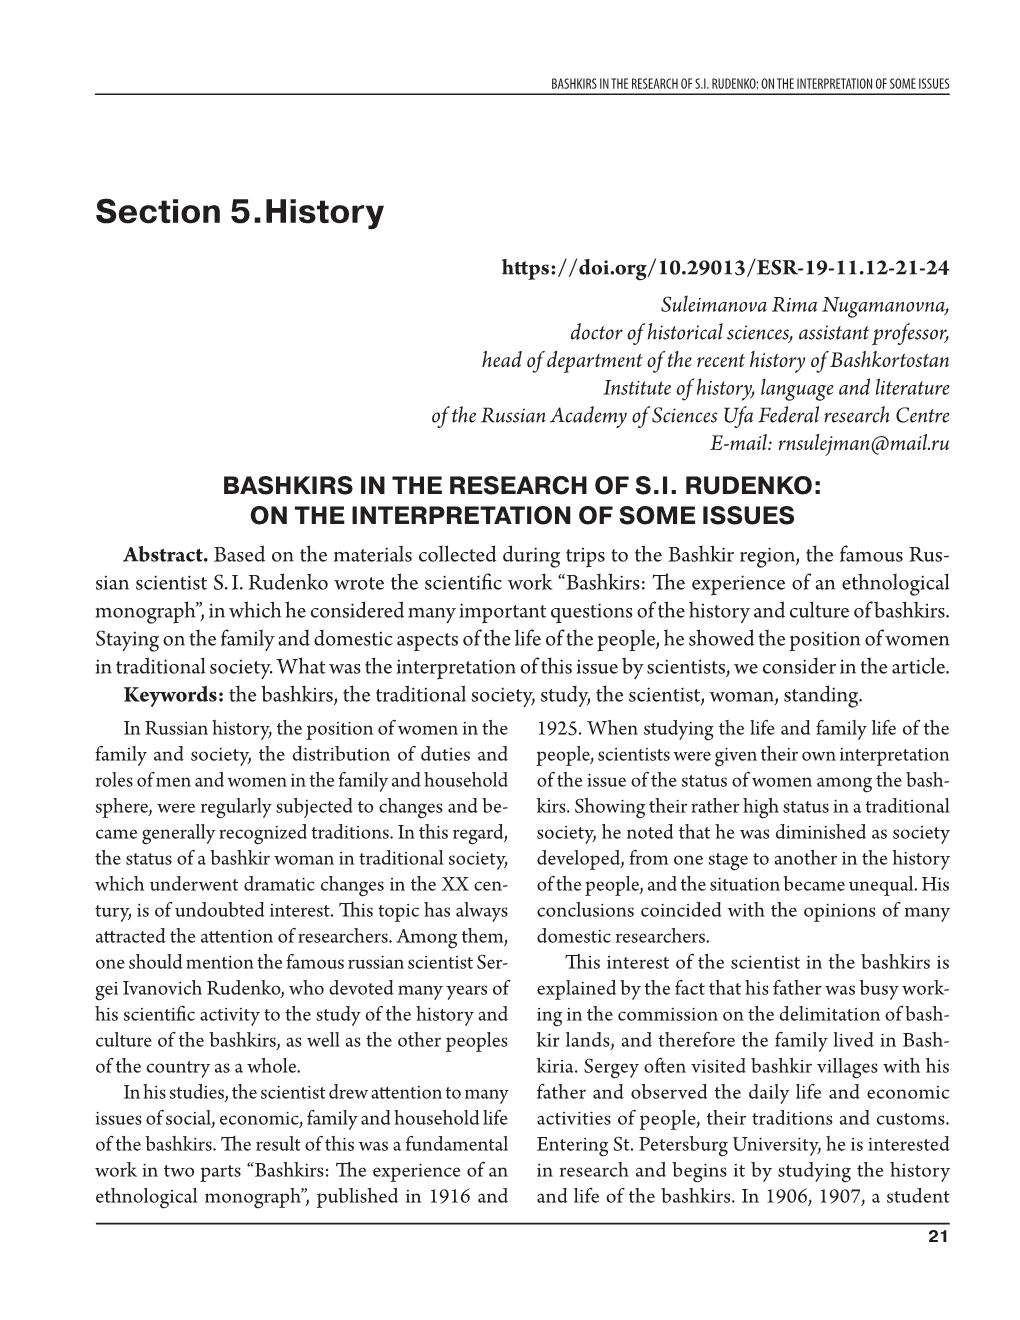 Bashkirs in the Research of Si Rudenko